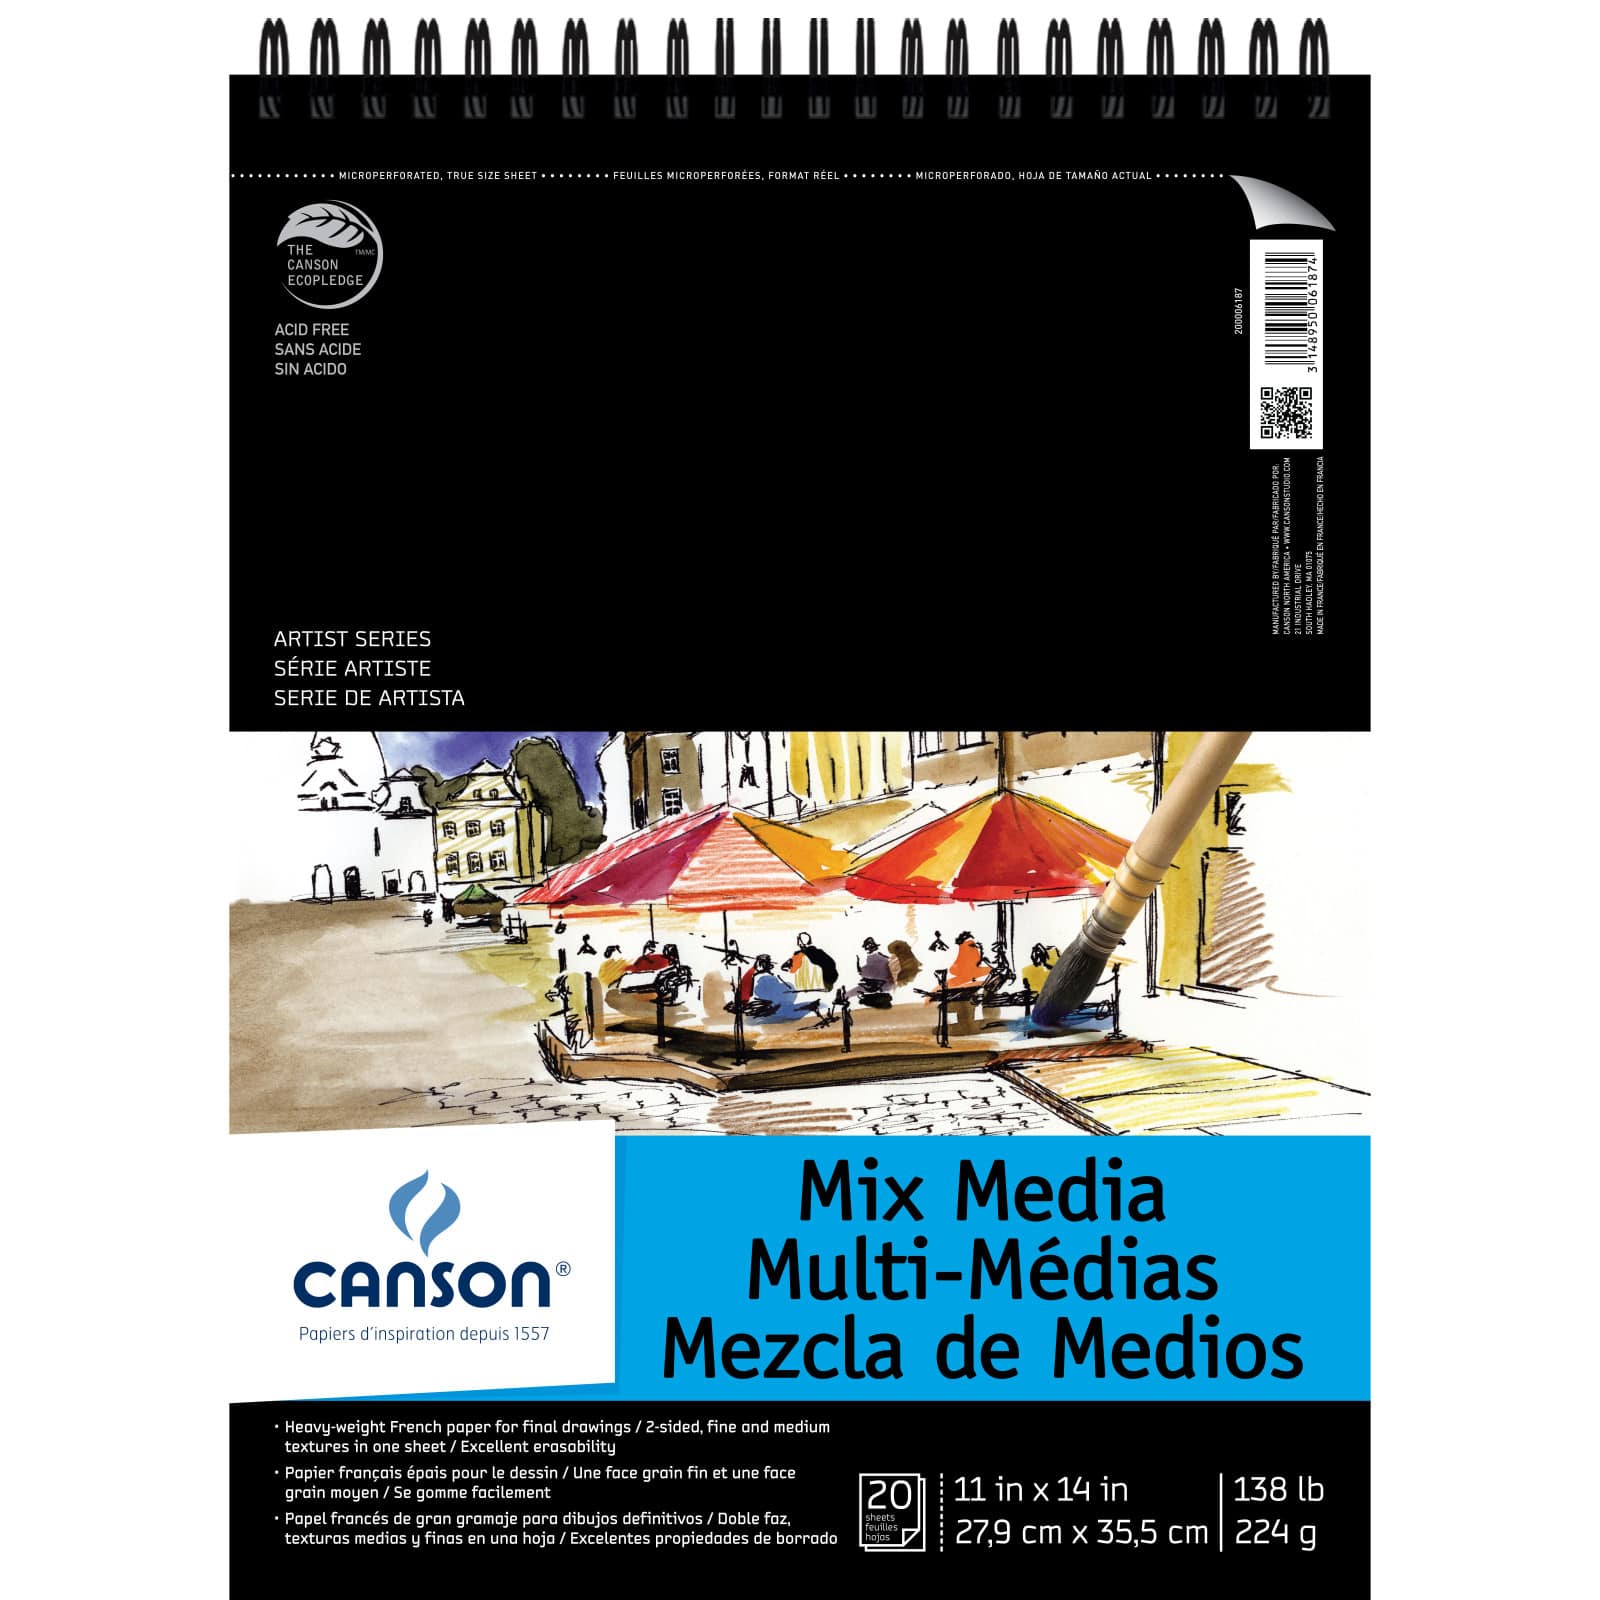 Canson® Artist Series Mix Media Book